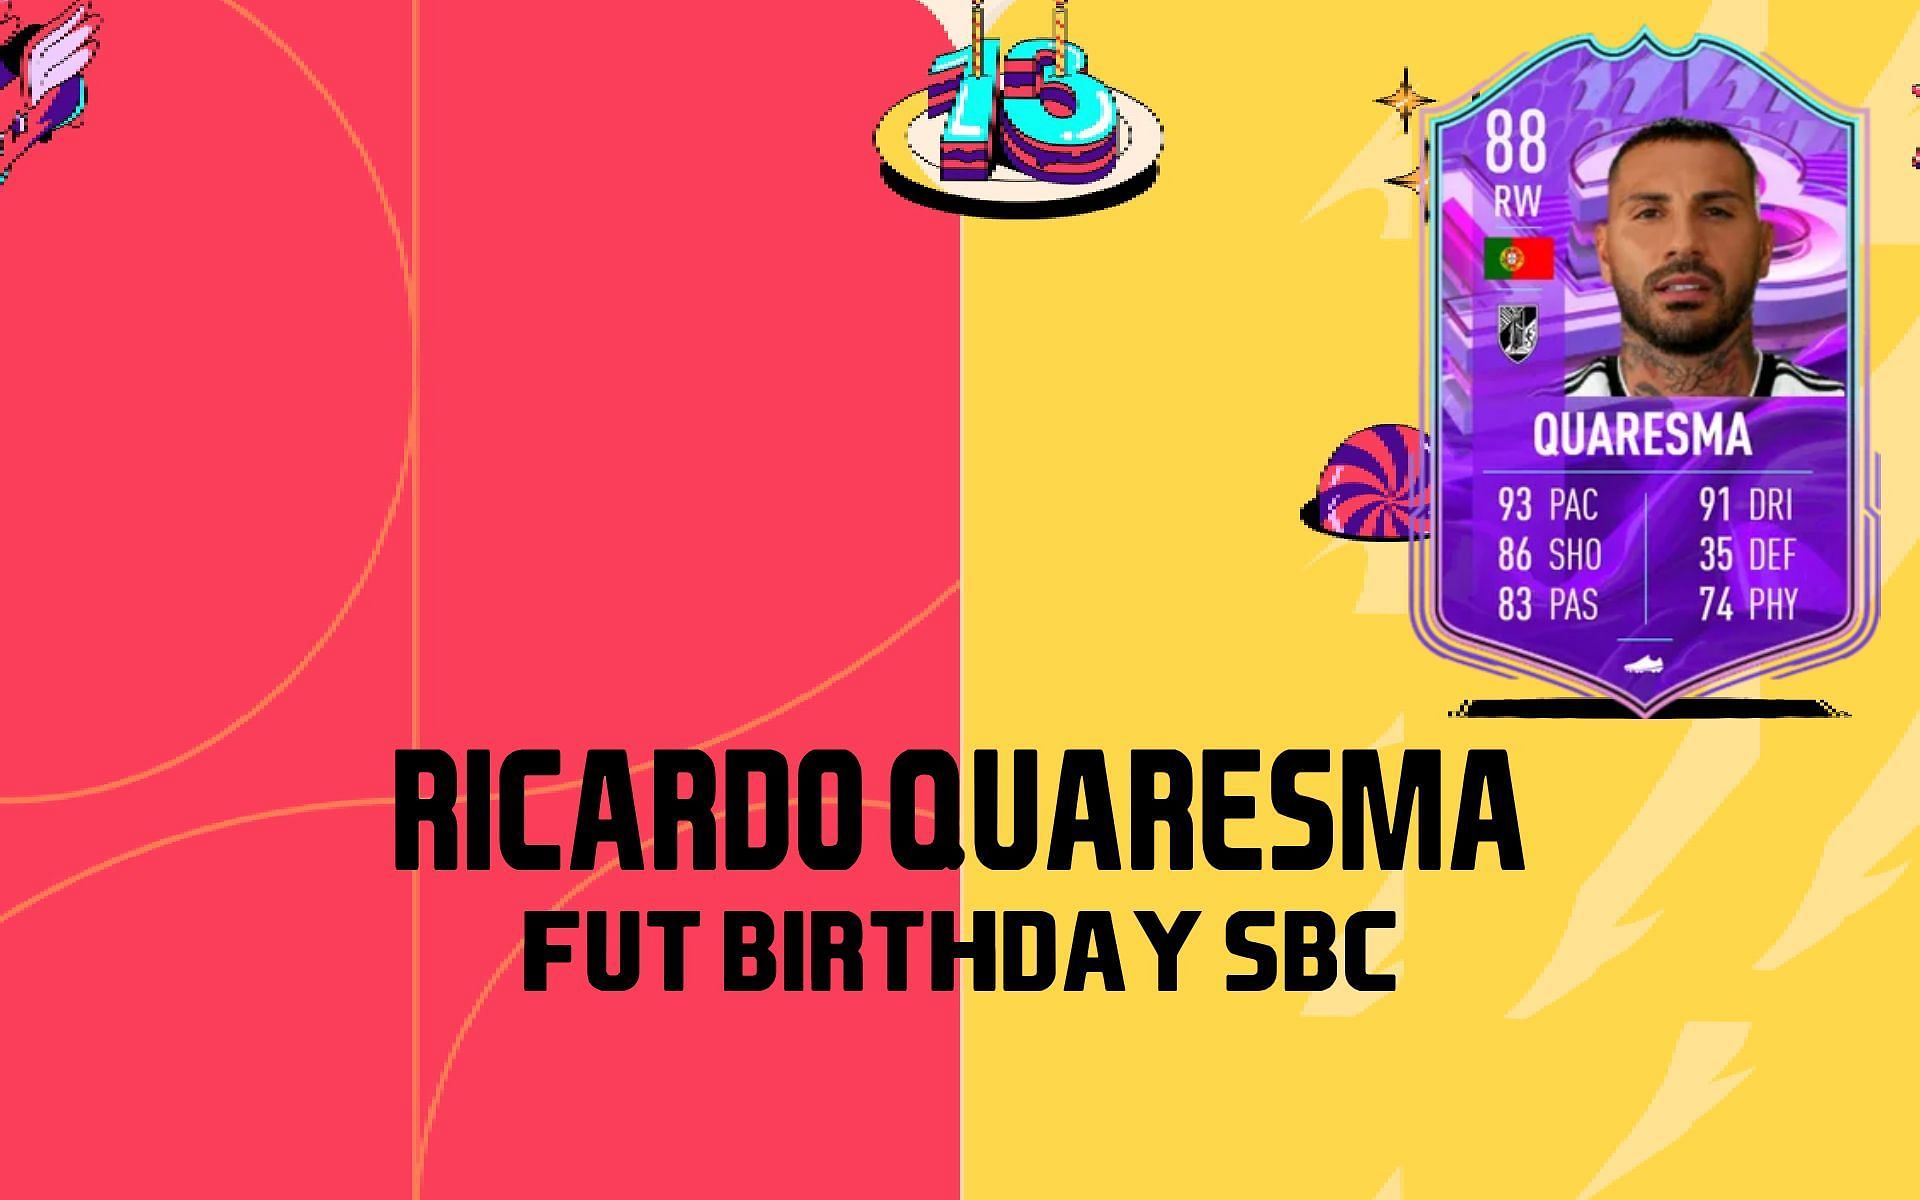 Ricardo Quaresma FUT Birthday special in FIFA 22 Ultimate Team (Image via Sportskeeda)